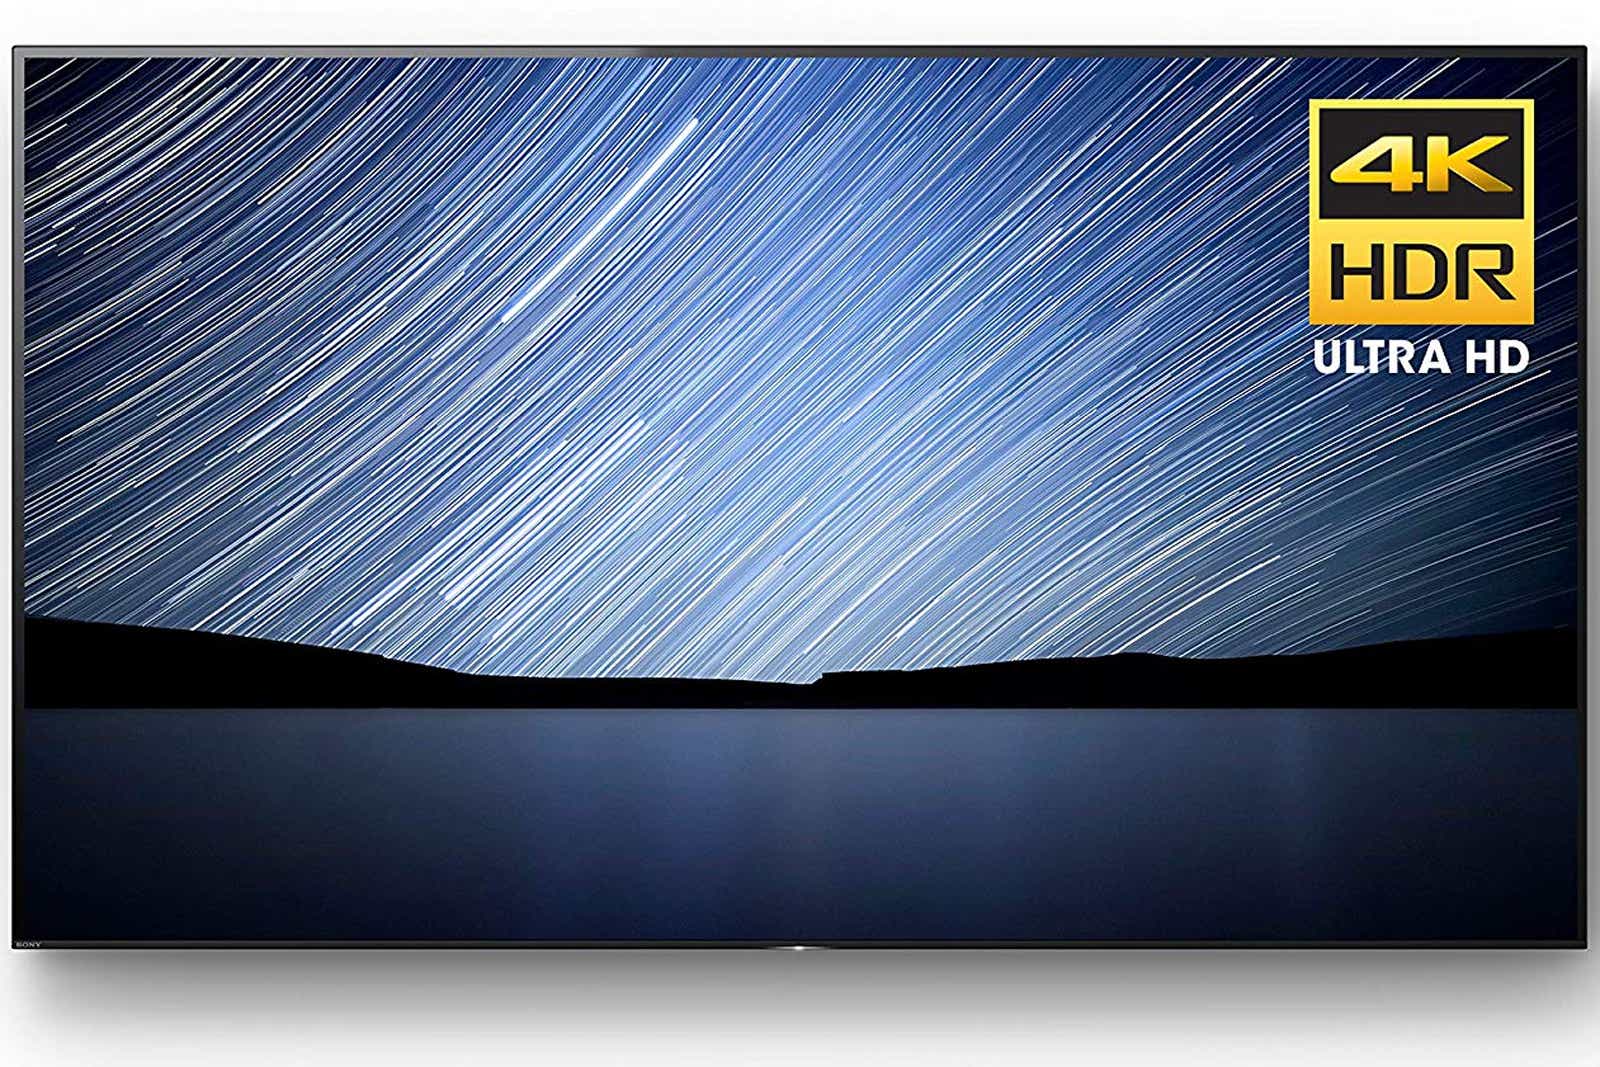 Sony Bravia A1E-series 4K UHD OLED TV (65-inch class, model XBR65A1E)